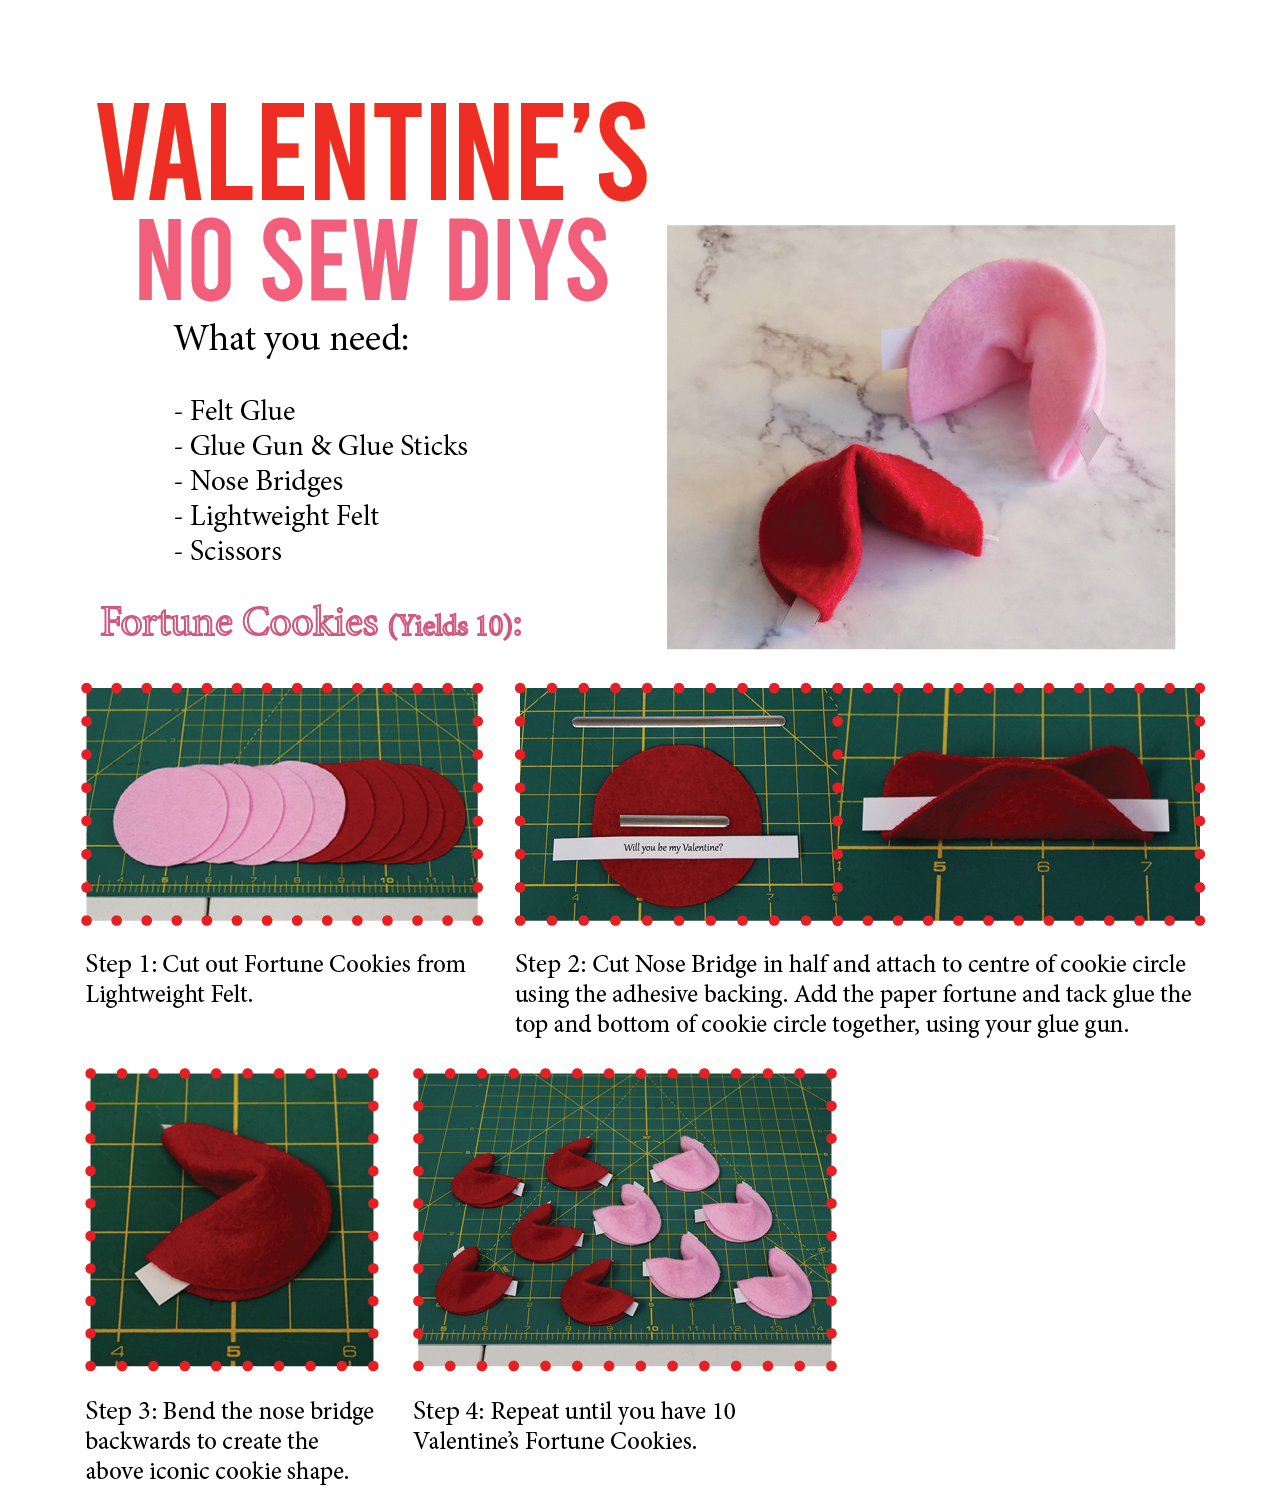 Steps to create your Valentine's No Sew DIYs